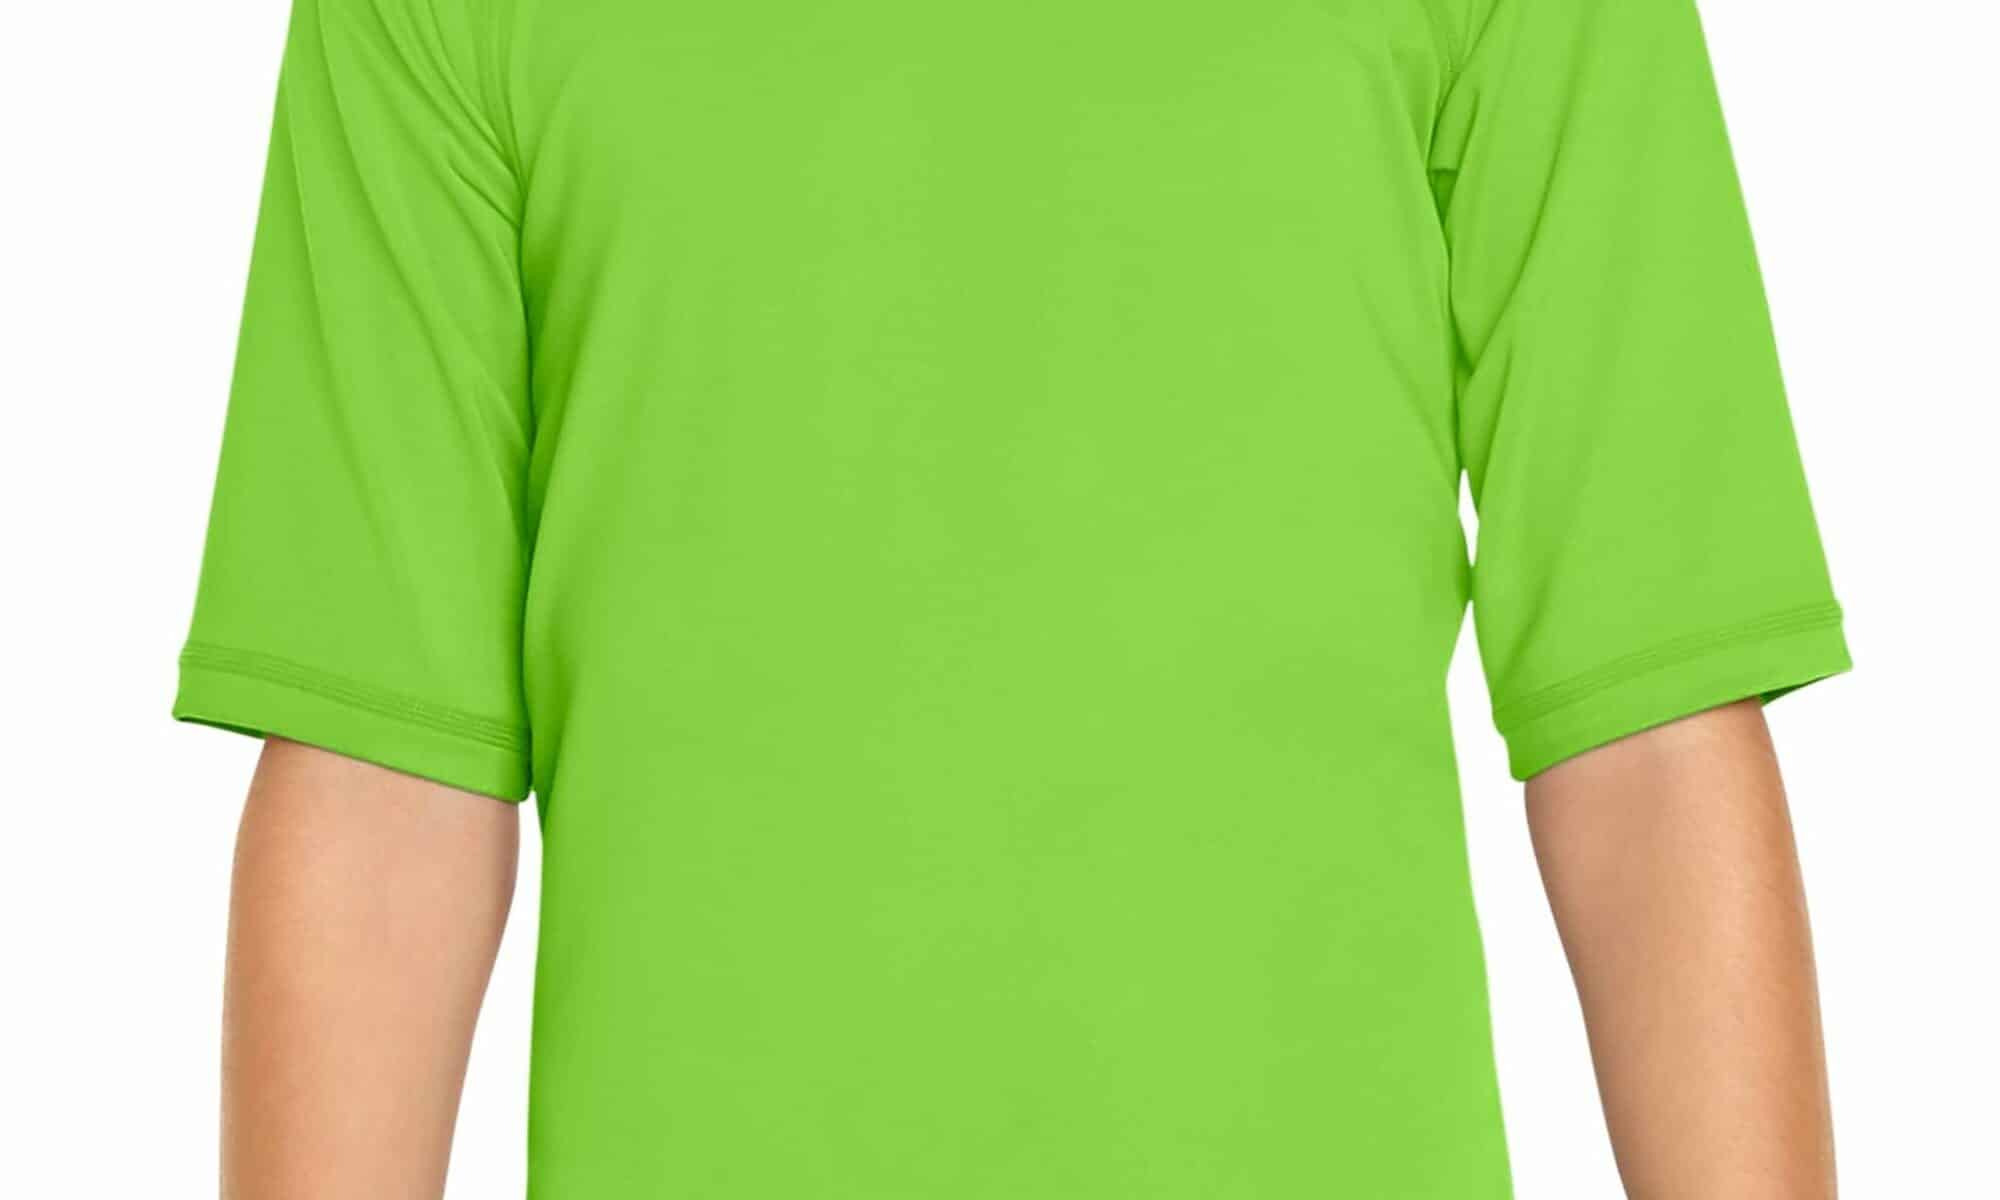 Rash Guard Short Sleeve - Lime Green